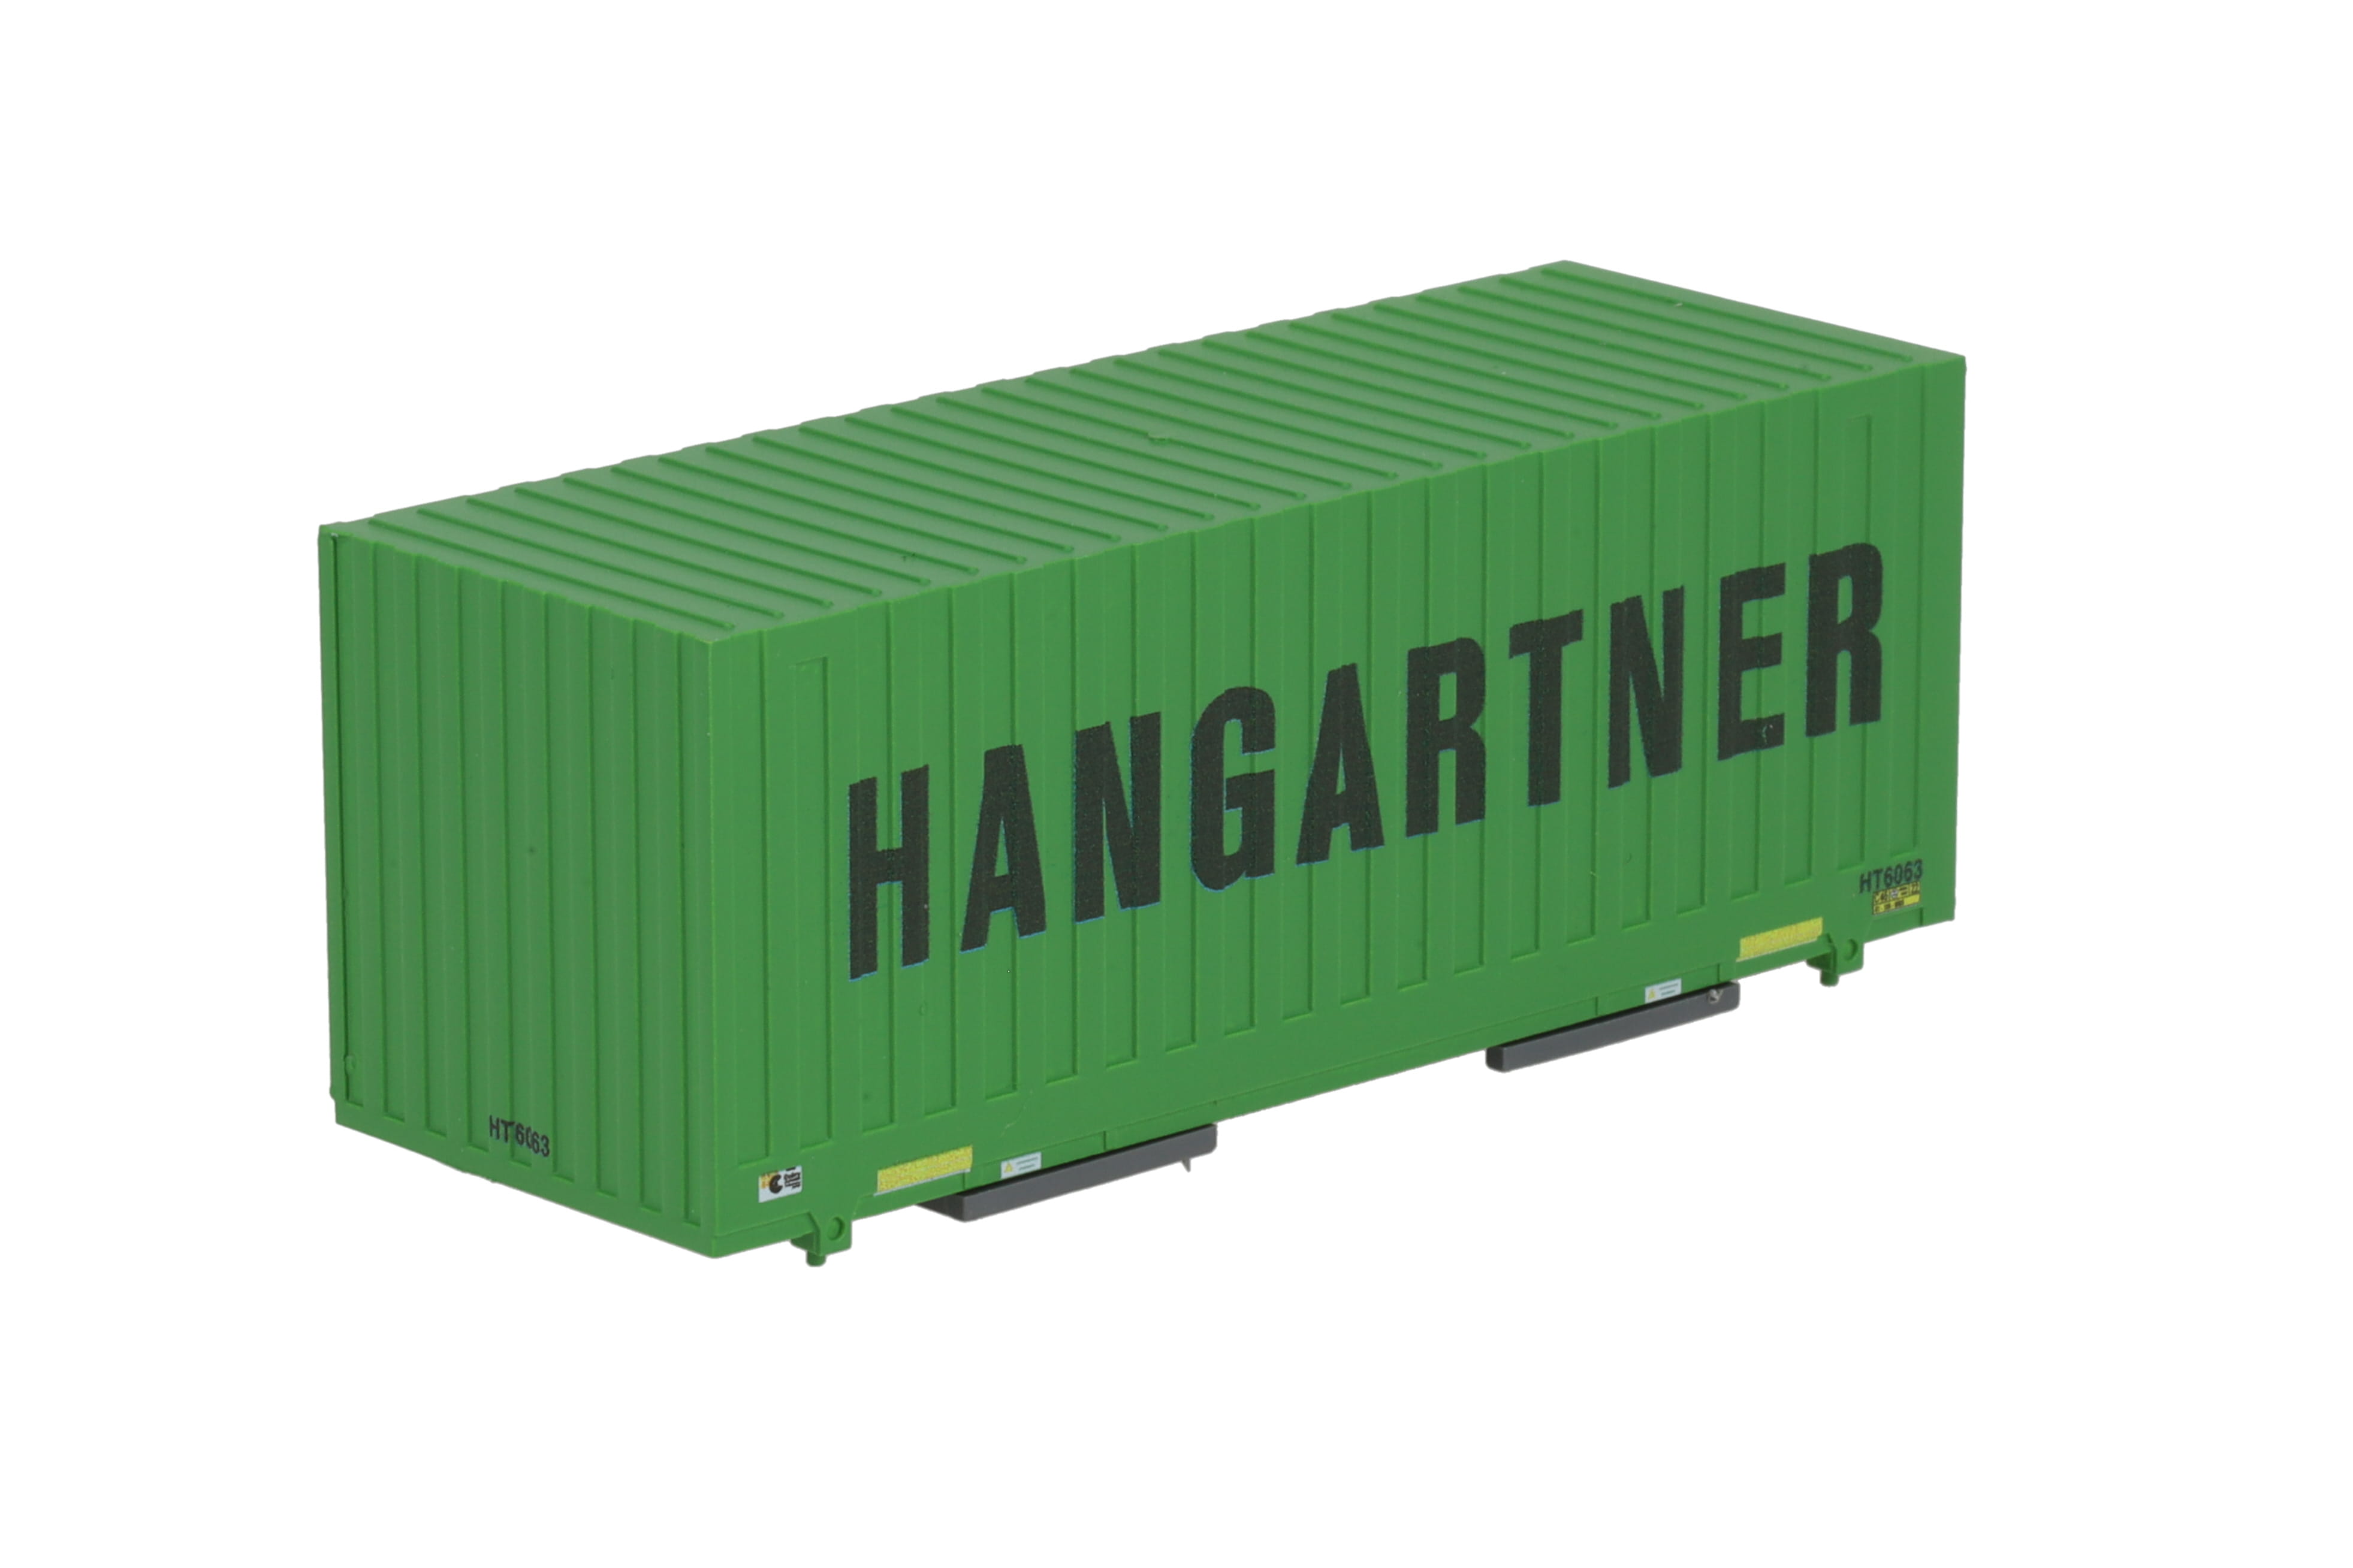 1:87 Container WB-C715 HANGAR Wechselbehälter WB-C 715 Cobra Spu-Wa Box, Aufschrift: HANGARTNER, Behälter-Nr: HT 6063